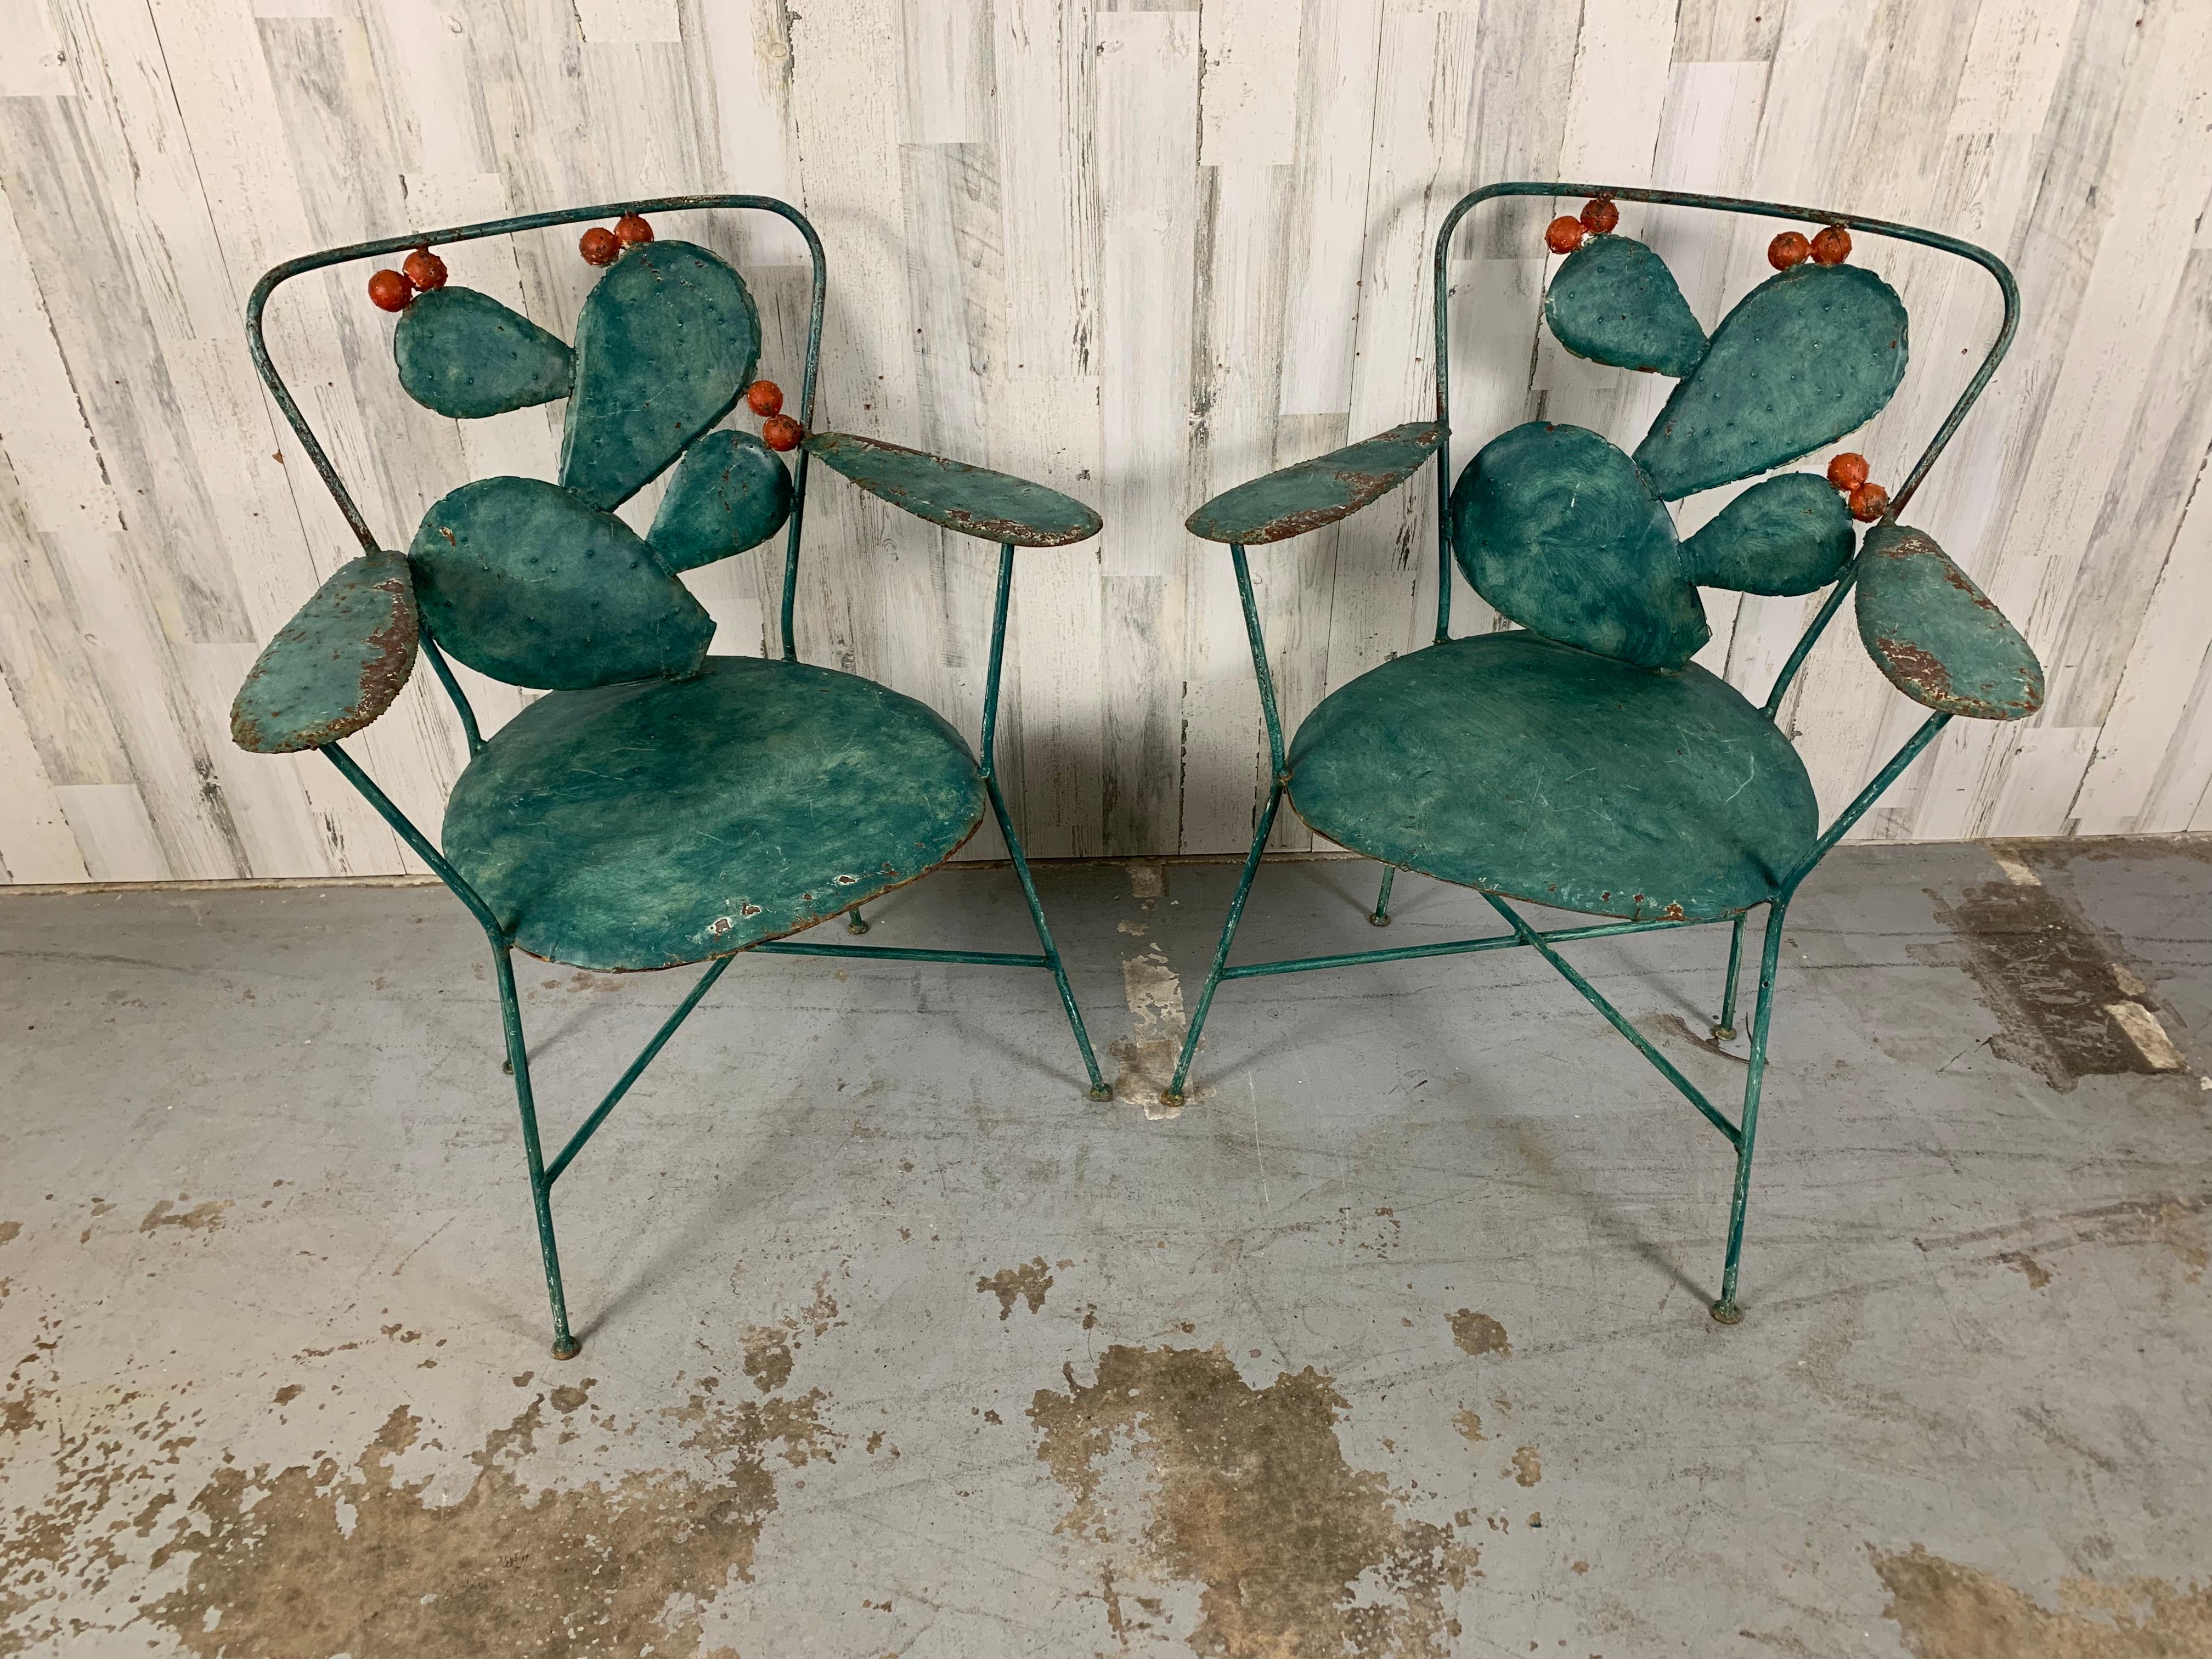 Organic Modern Prickly Pear Garden Chairs